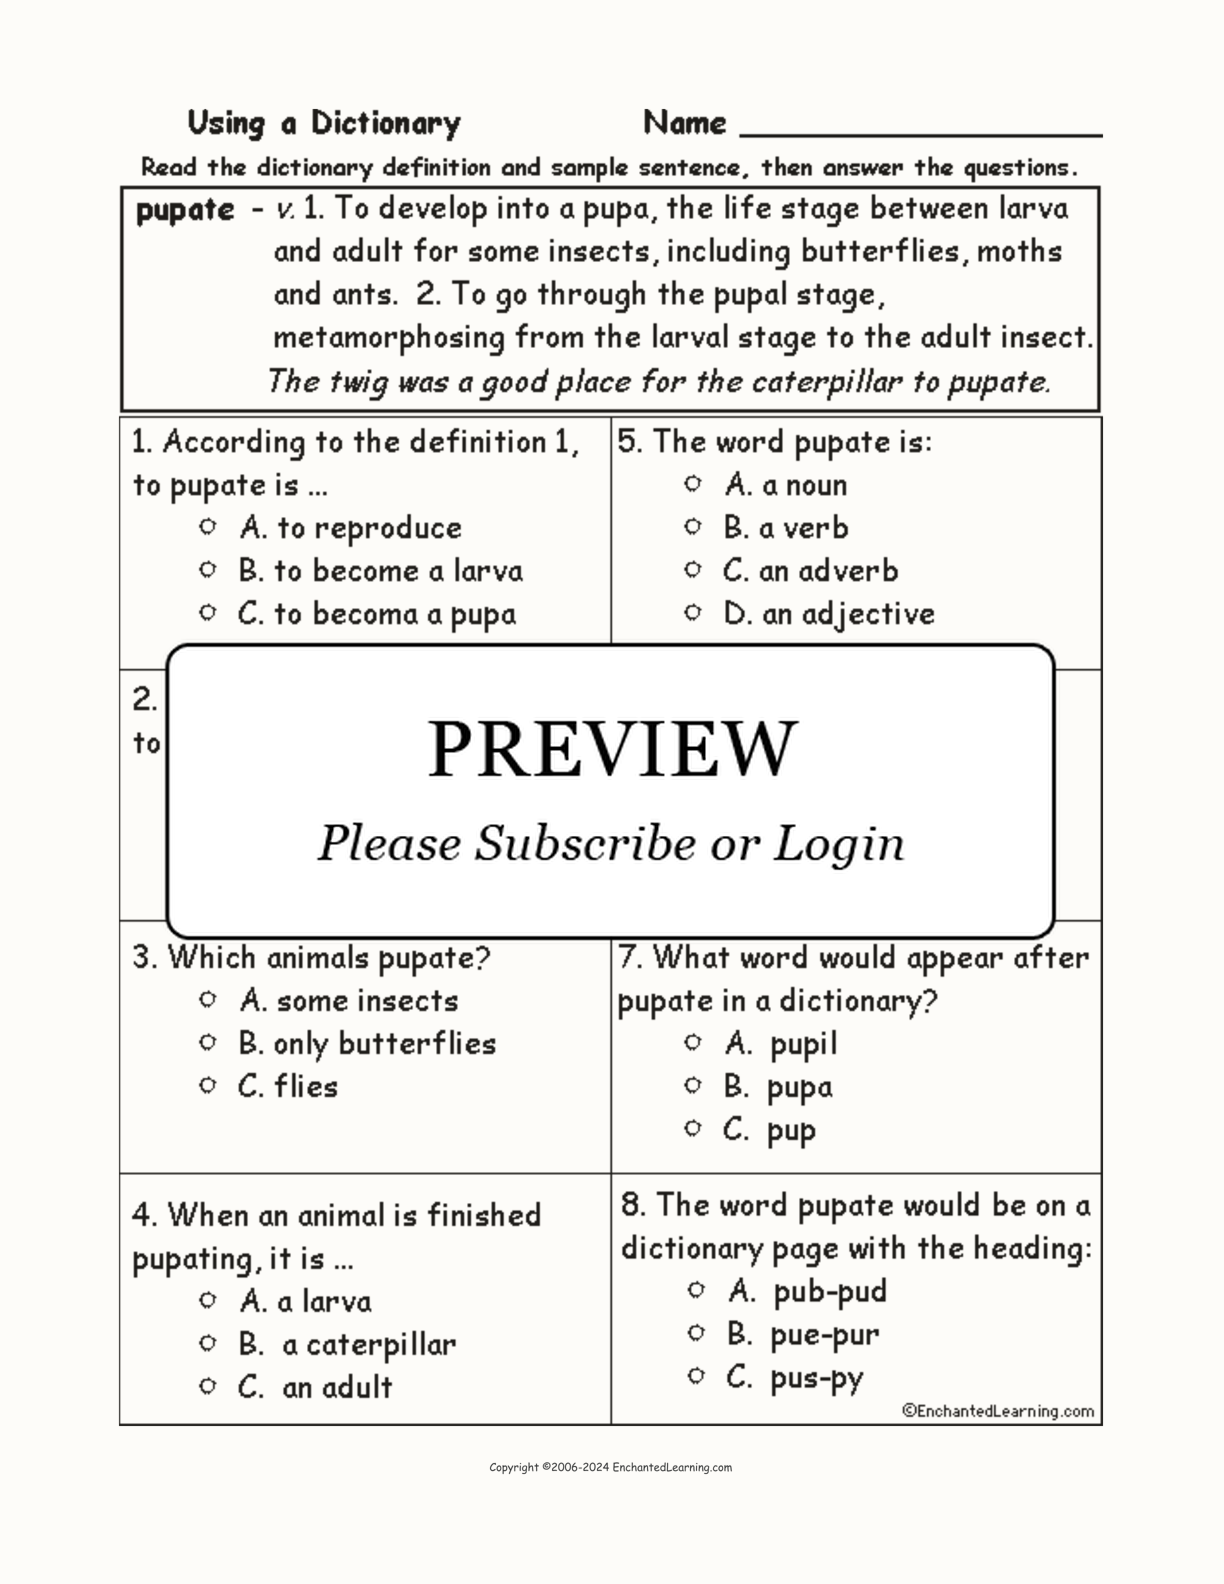 Pupate Definition Quiz interactive worksheet page 1